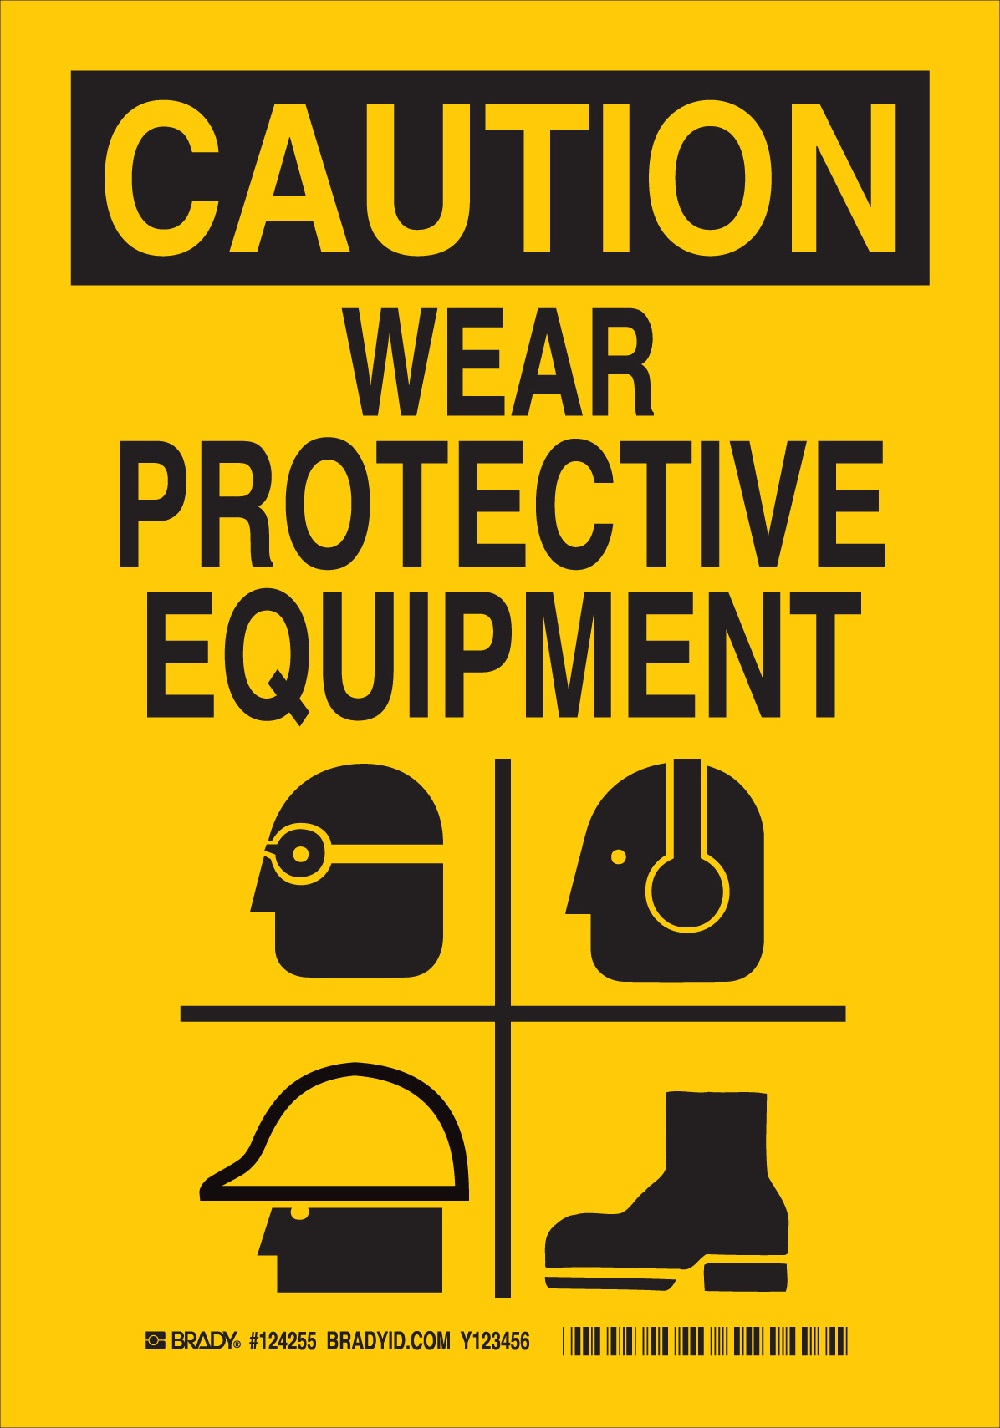 Printable Wear Protcetive Equipment Caution Sign